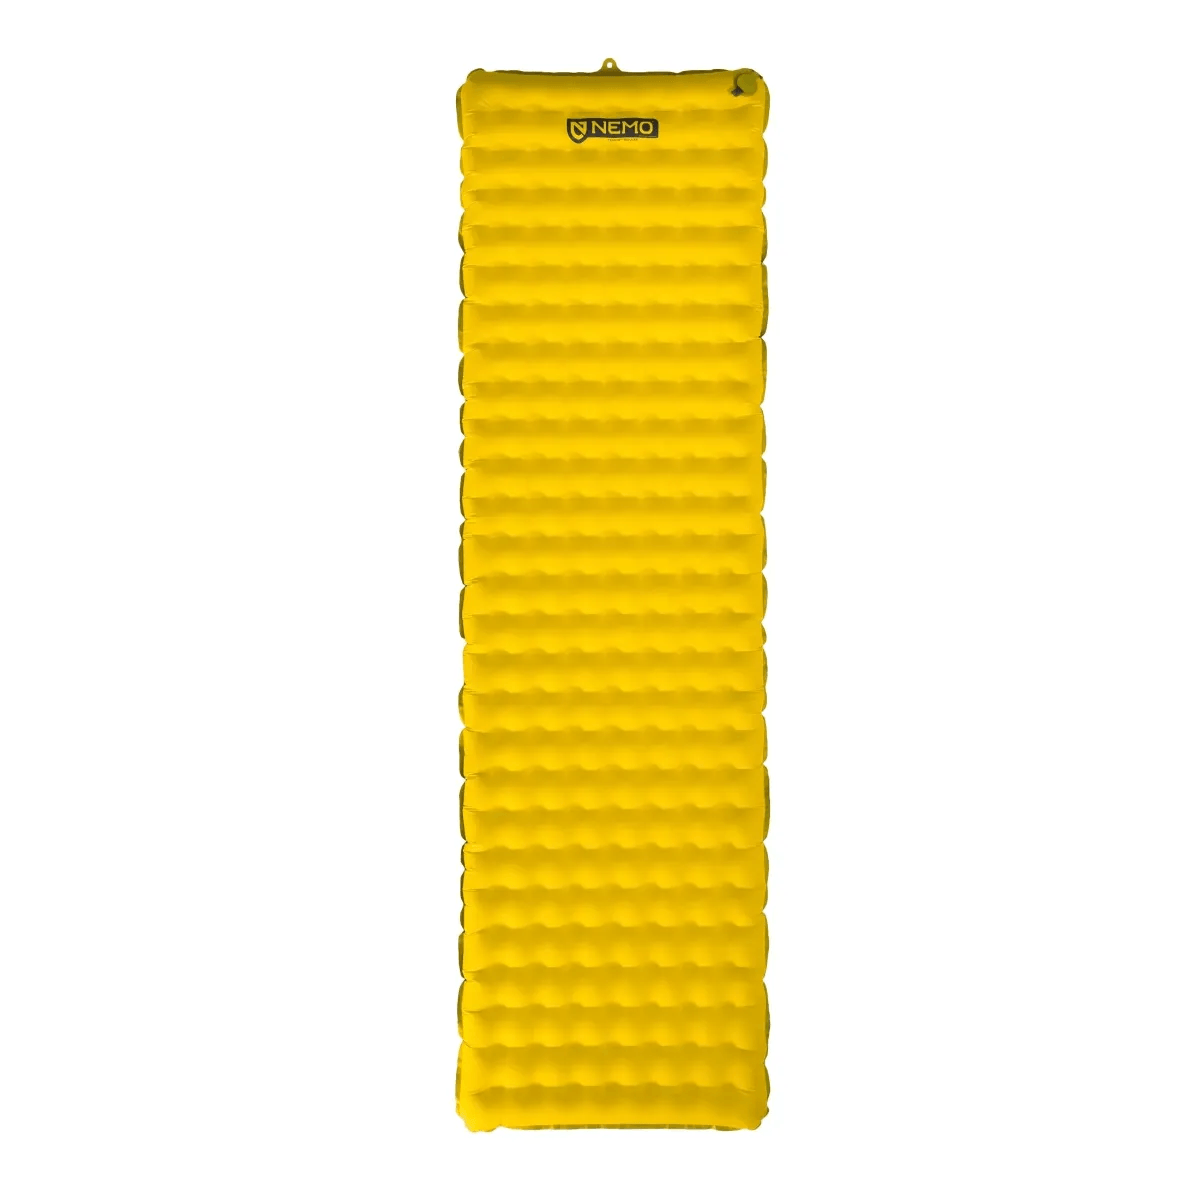 Nemo Tensor Ultralight Insulated Sleeping Pad (Goldfinch): Regular or Regular Mummy $99.95, Long/Wide $109.95 + Free Shipping